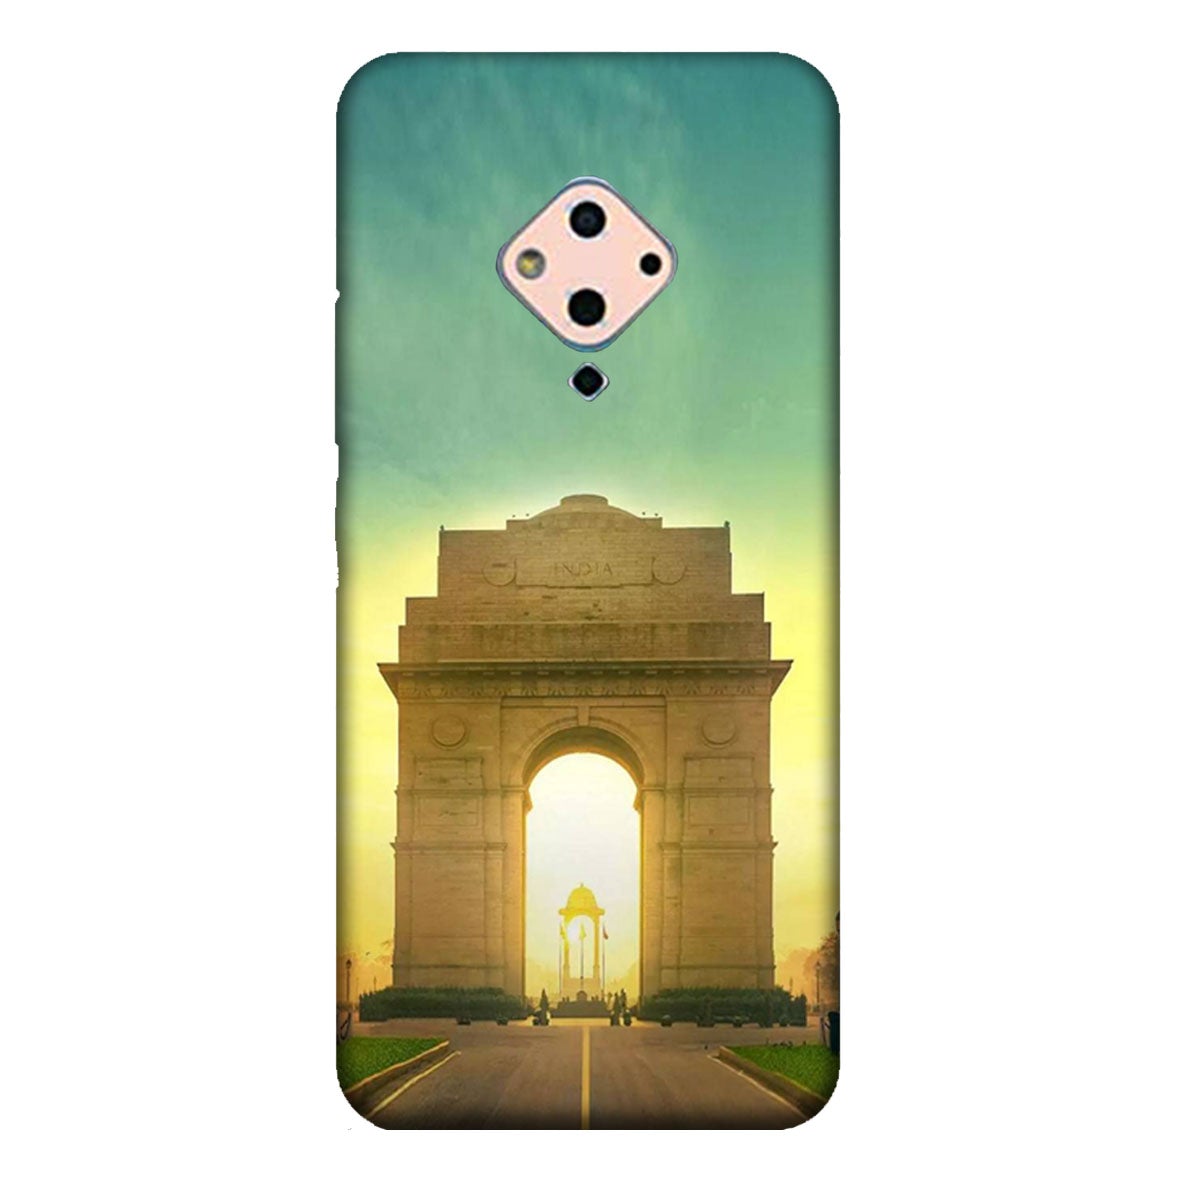 India Gate - Delhi - Mobile Phone Cover - Hard Case - Vivo